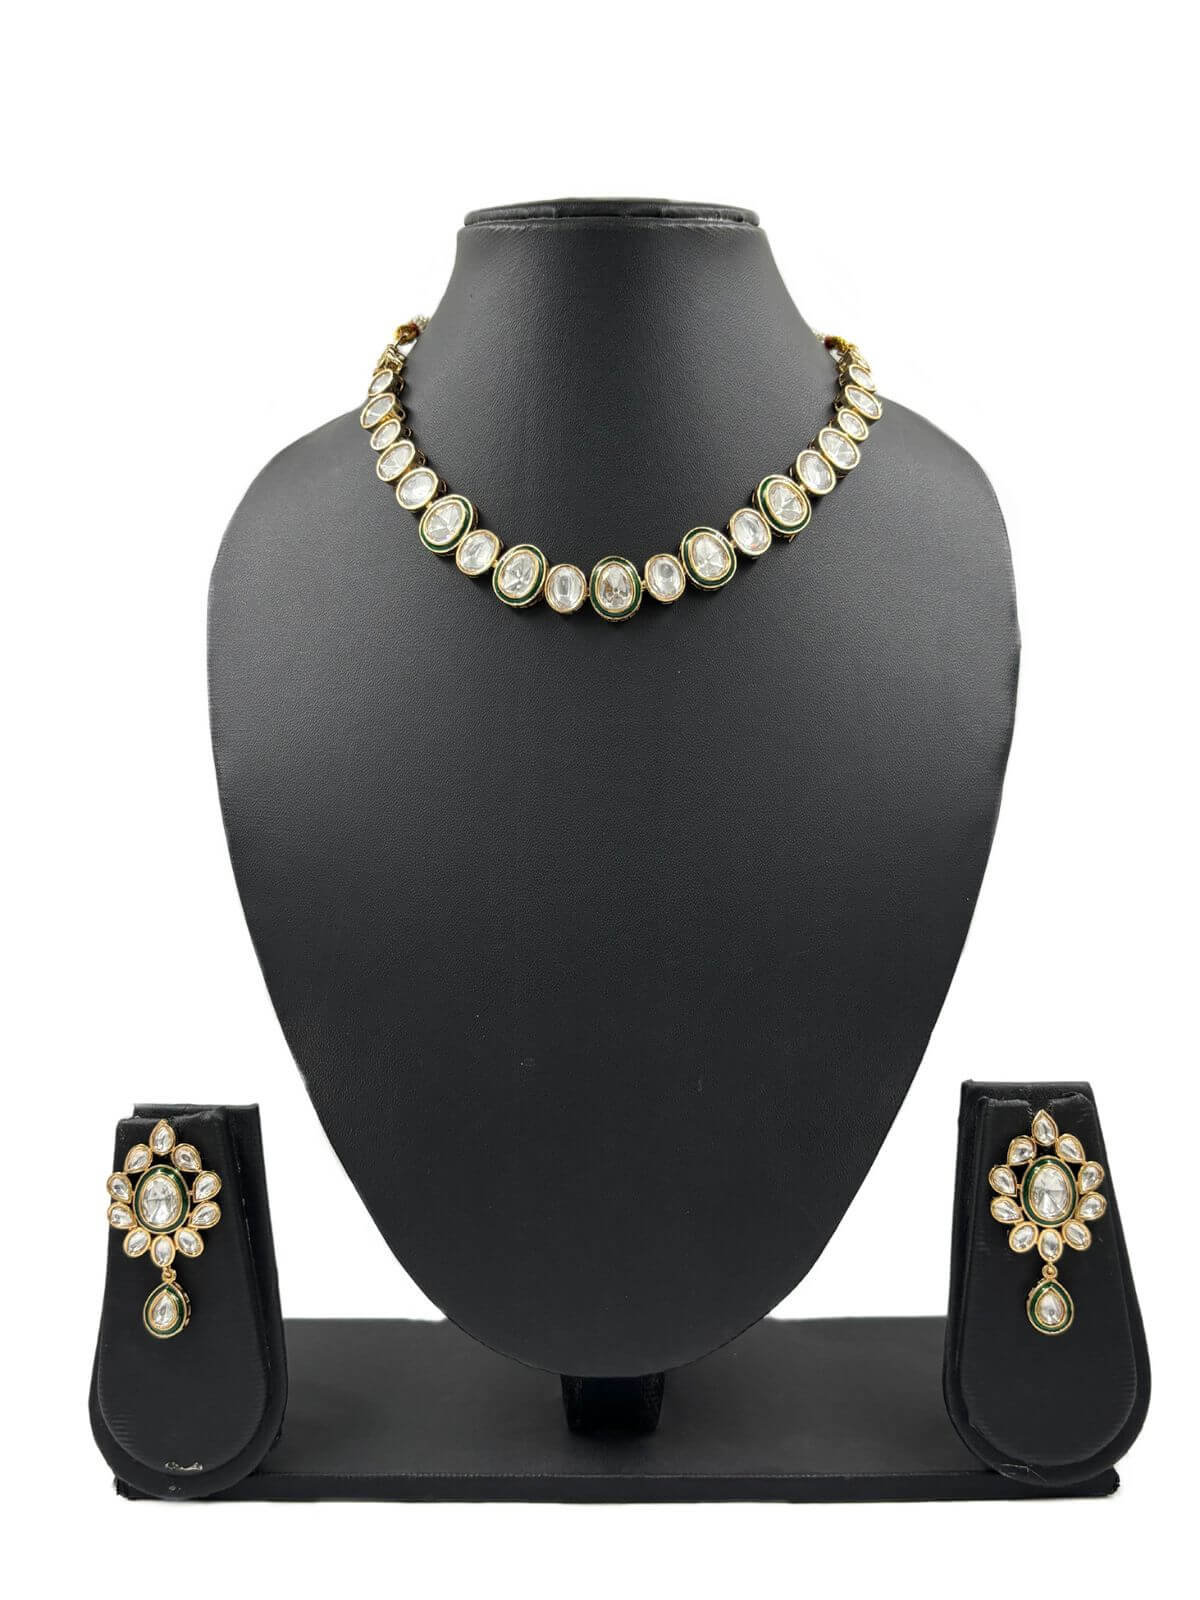 Designer Single Line Short Polki Necklace Set For Women